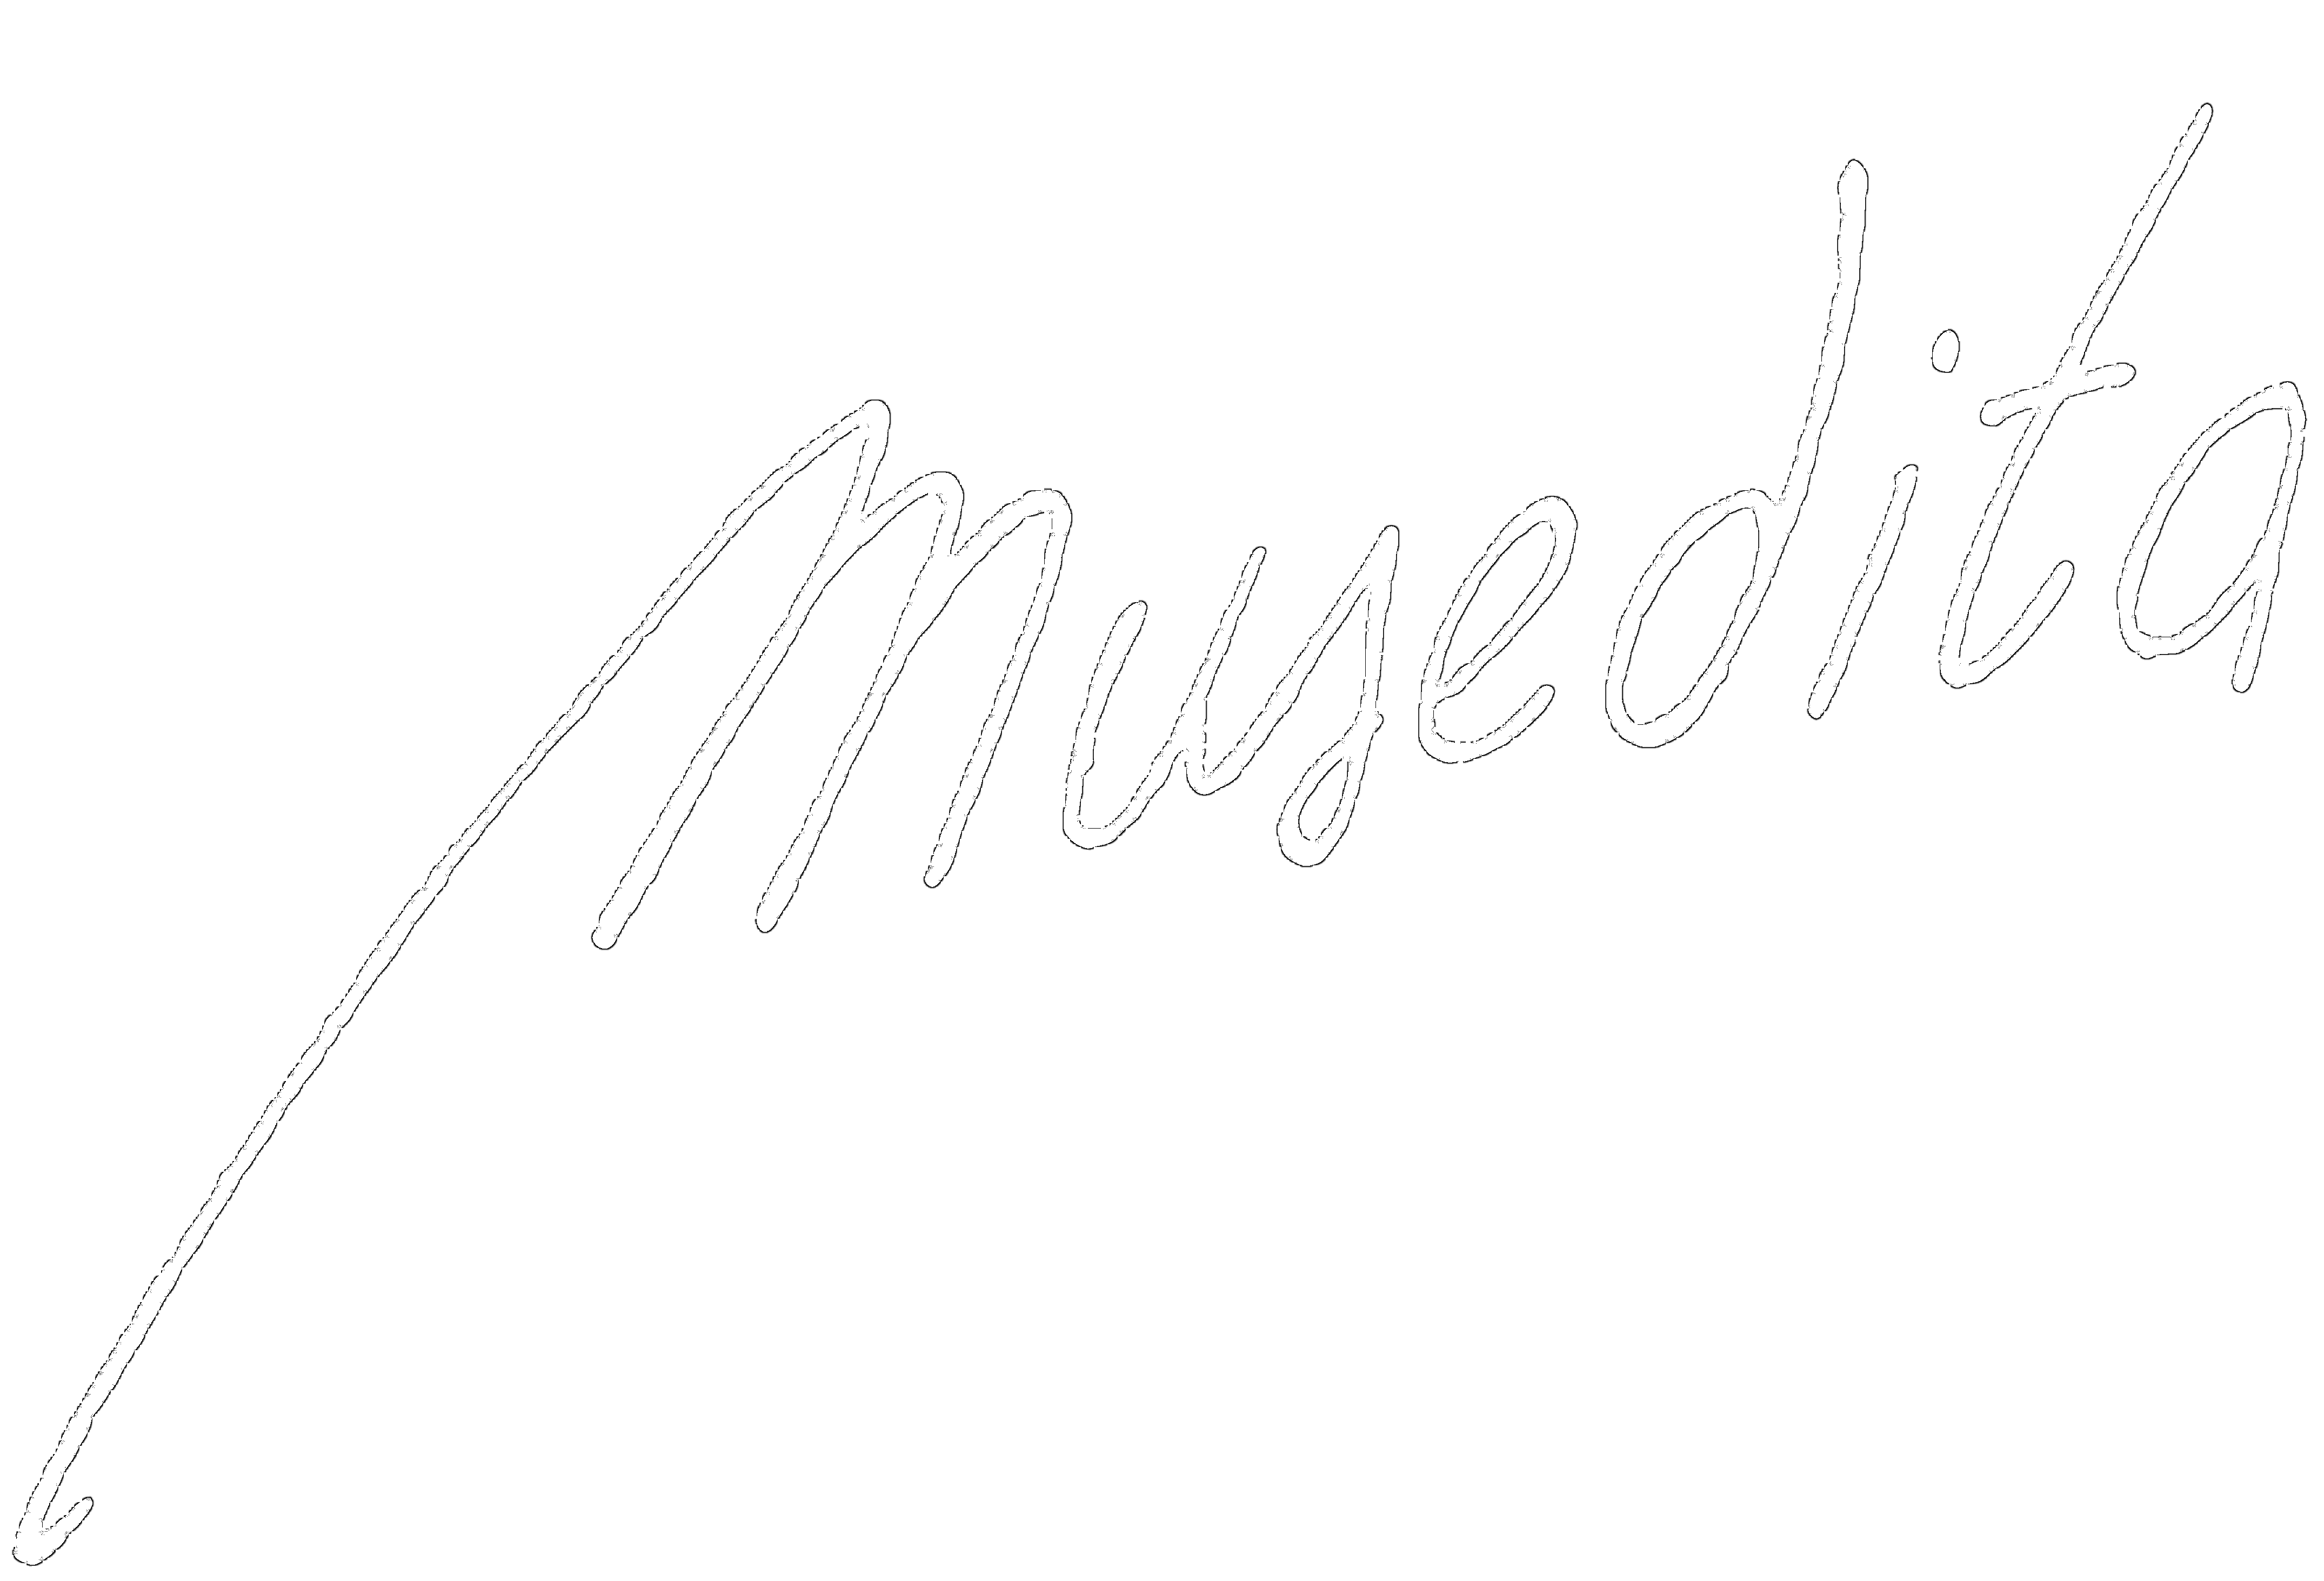 Musedita - Edizioni musicali